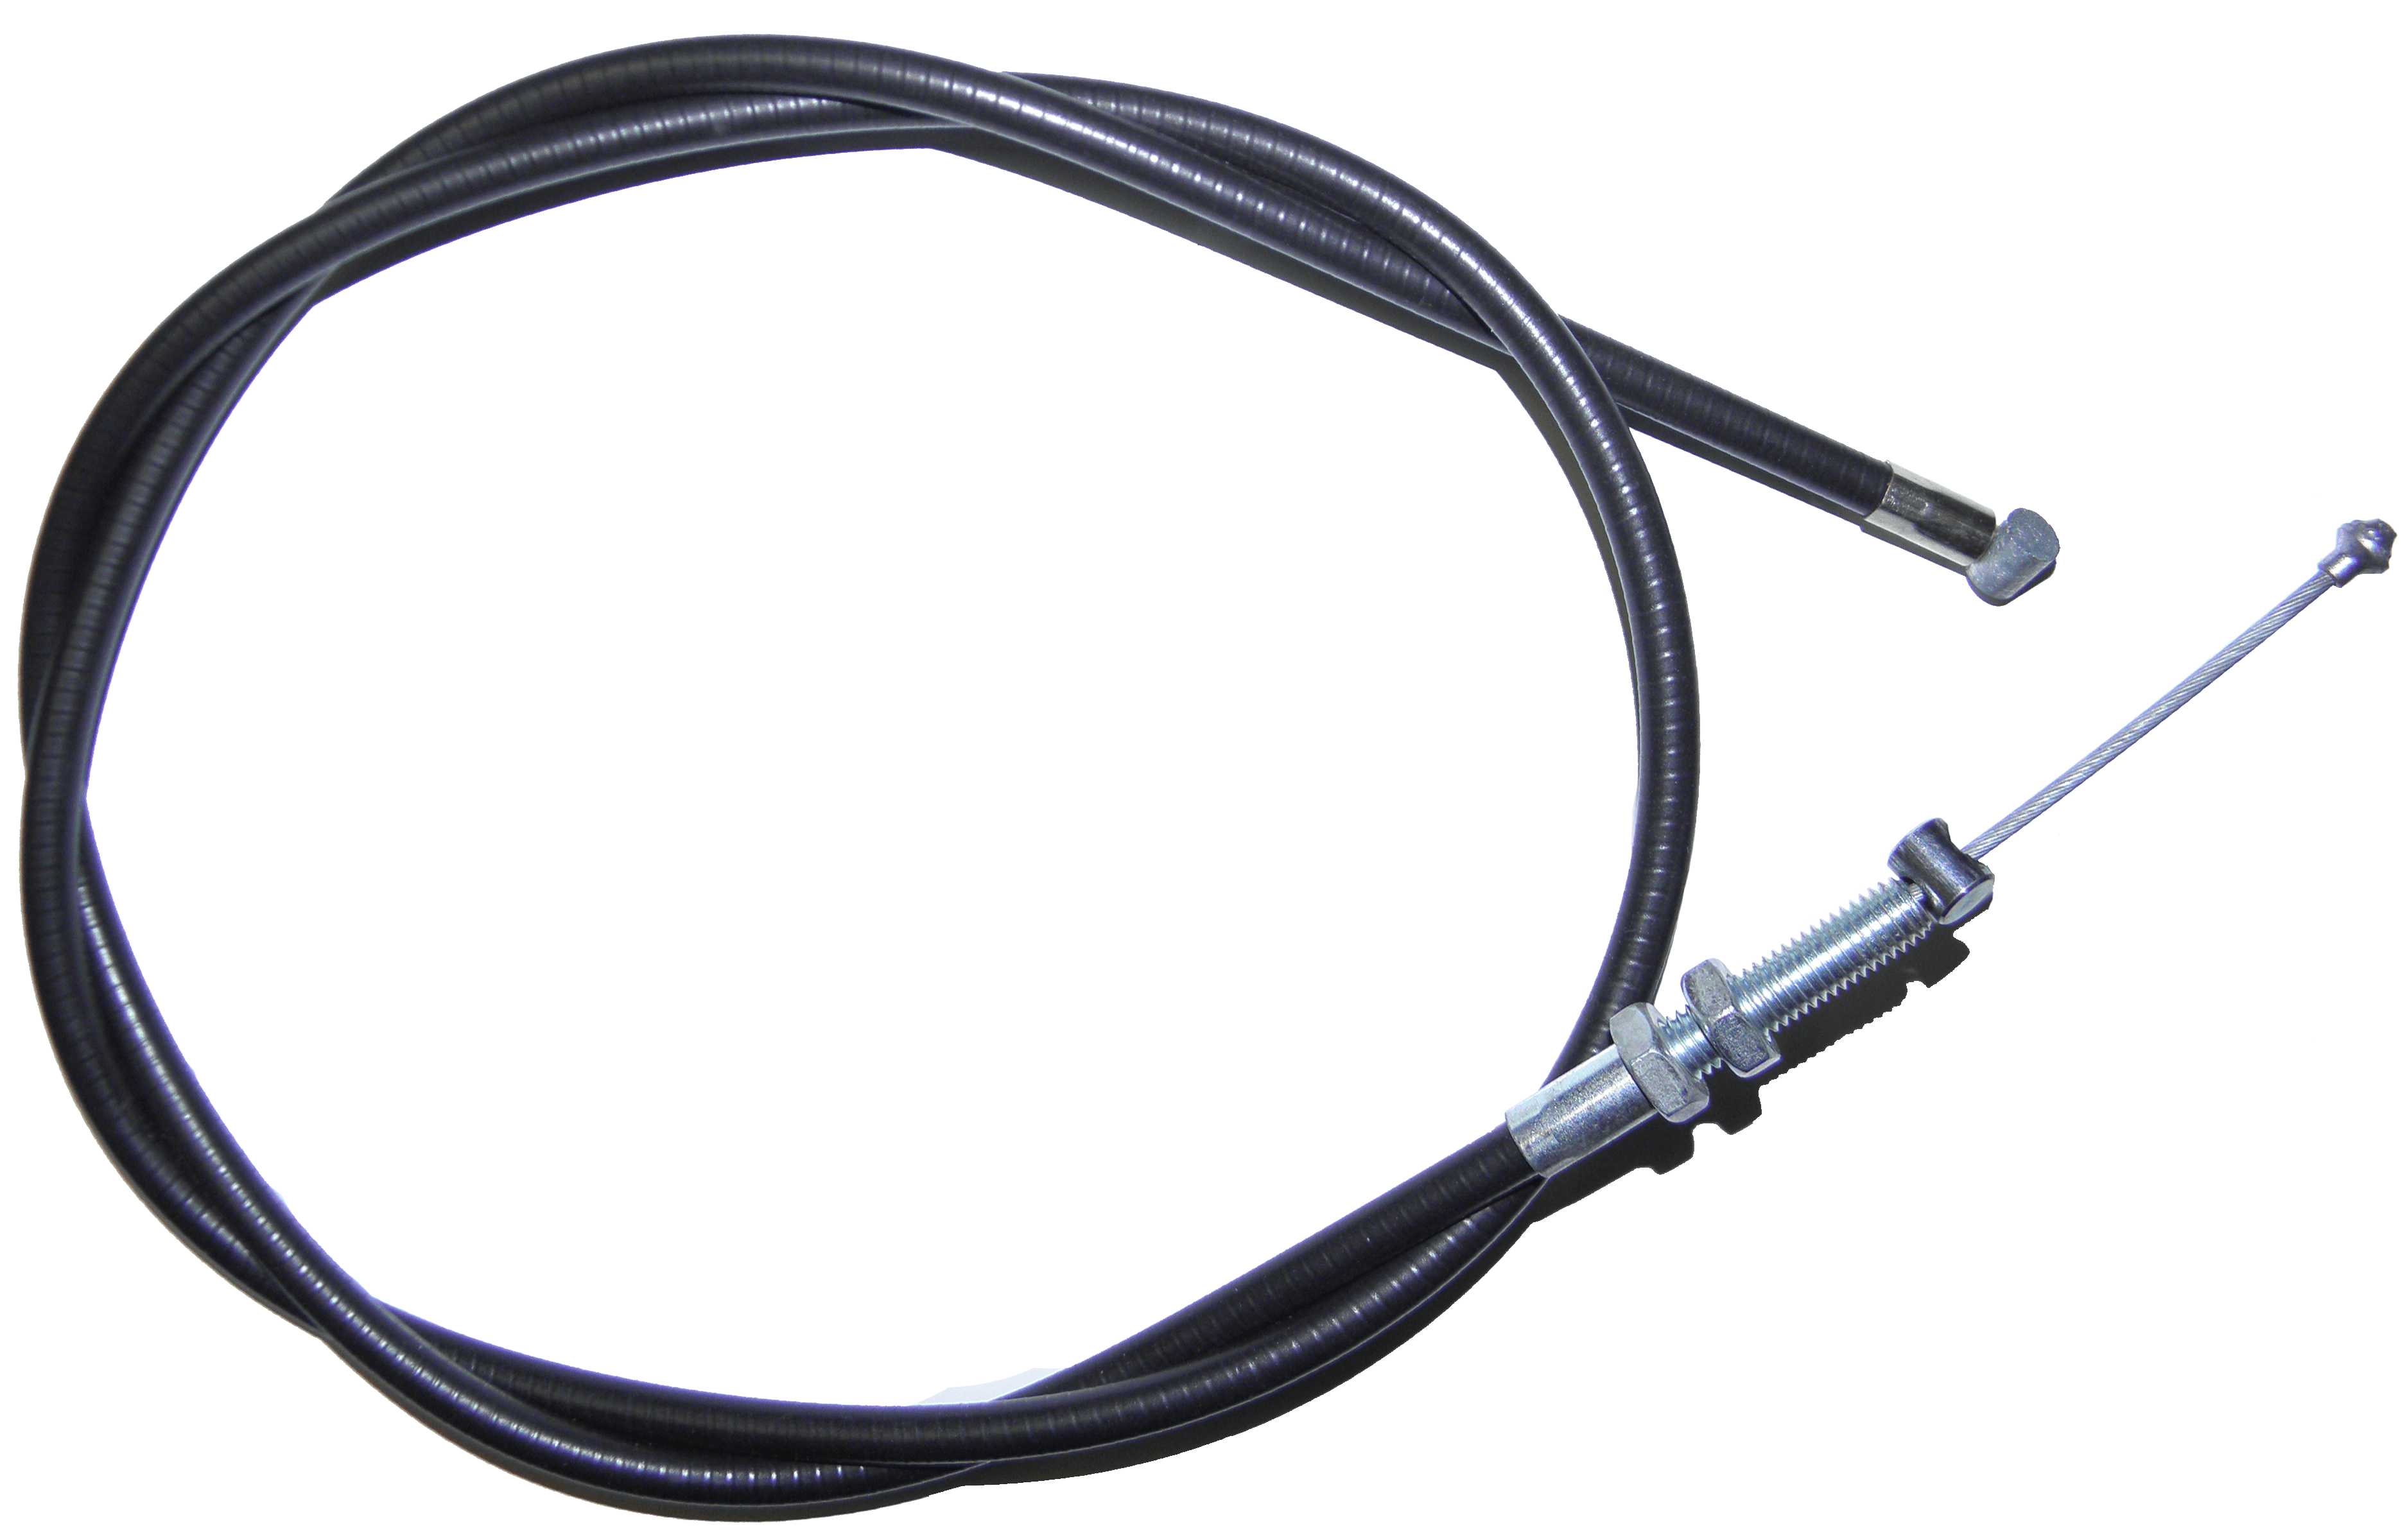 Apico Black Clutch Cable For Yamaha WR 400F WRF 400 1998-1999